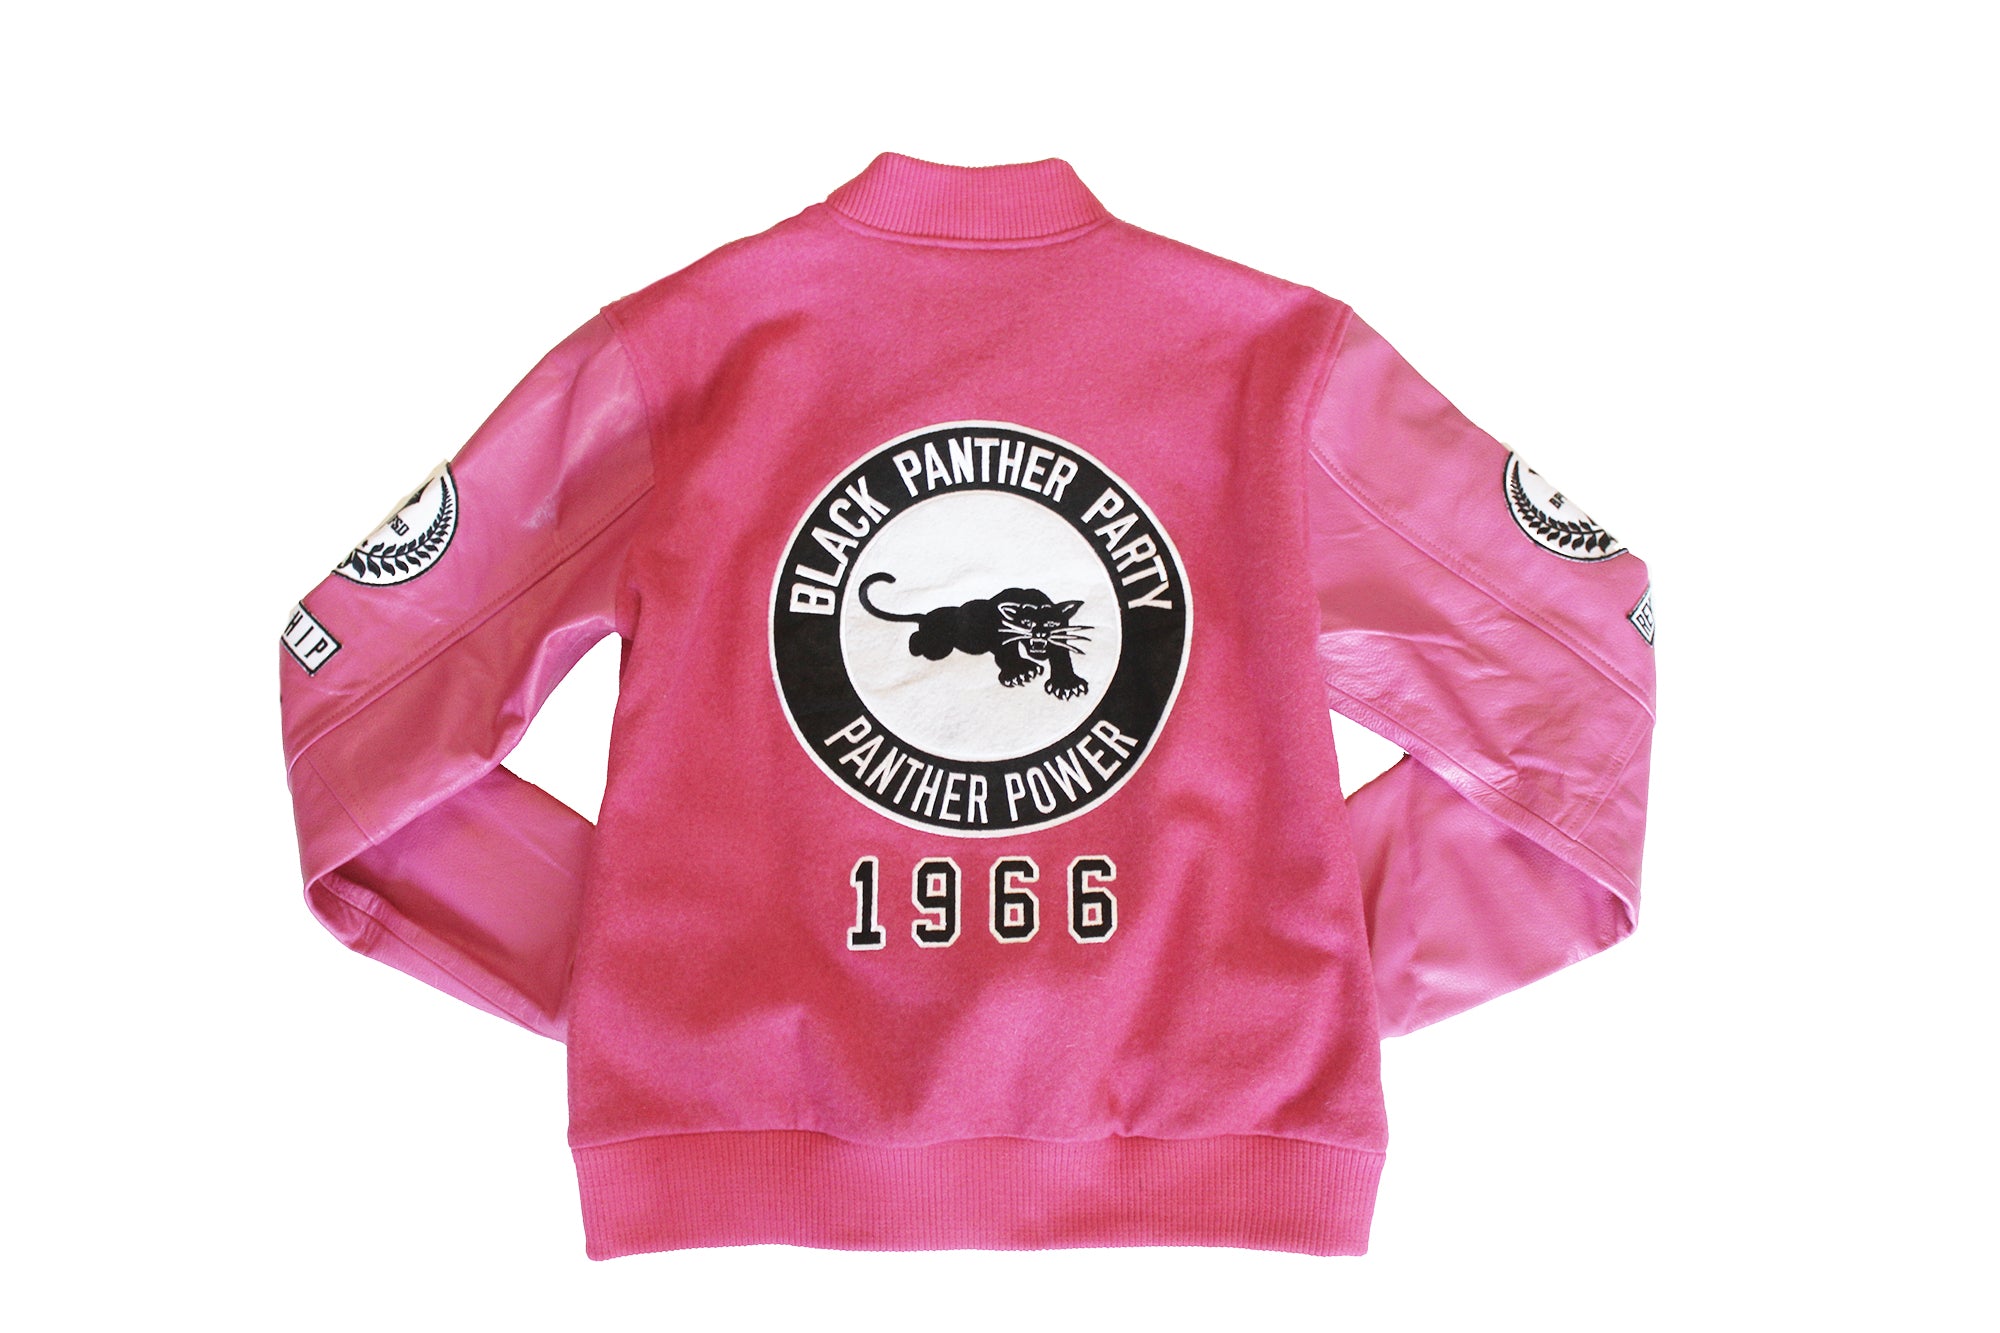 Black Panther Varsity Jacket Pink Contrast (Women's Sizing)